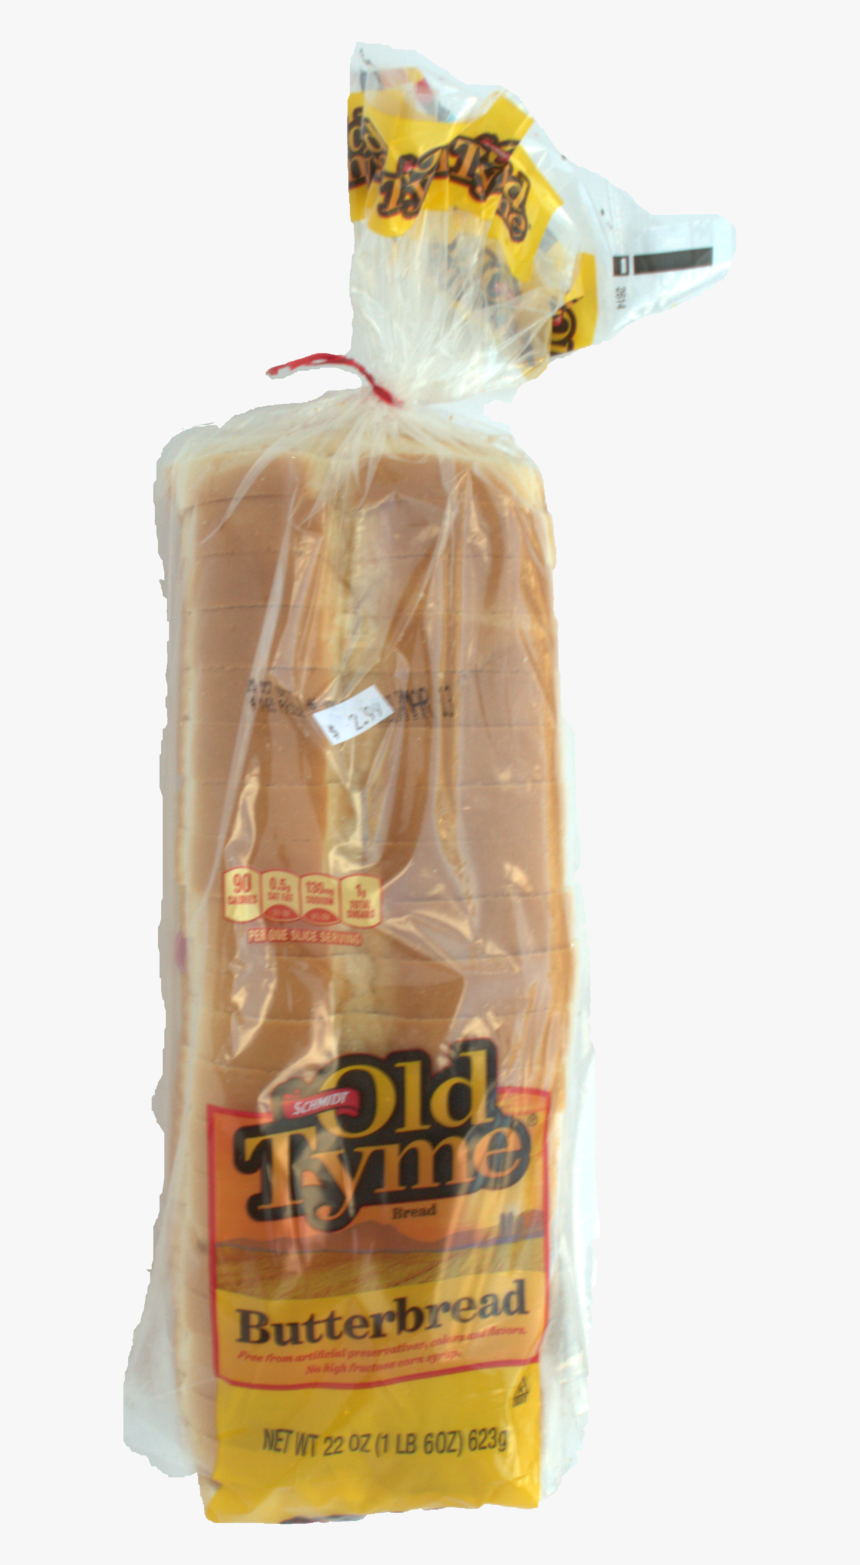 Loaf Of Bread Png, Transparent Png, Free Download